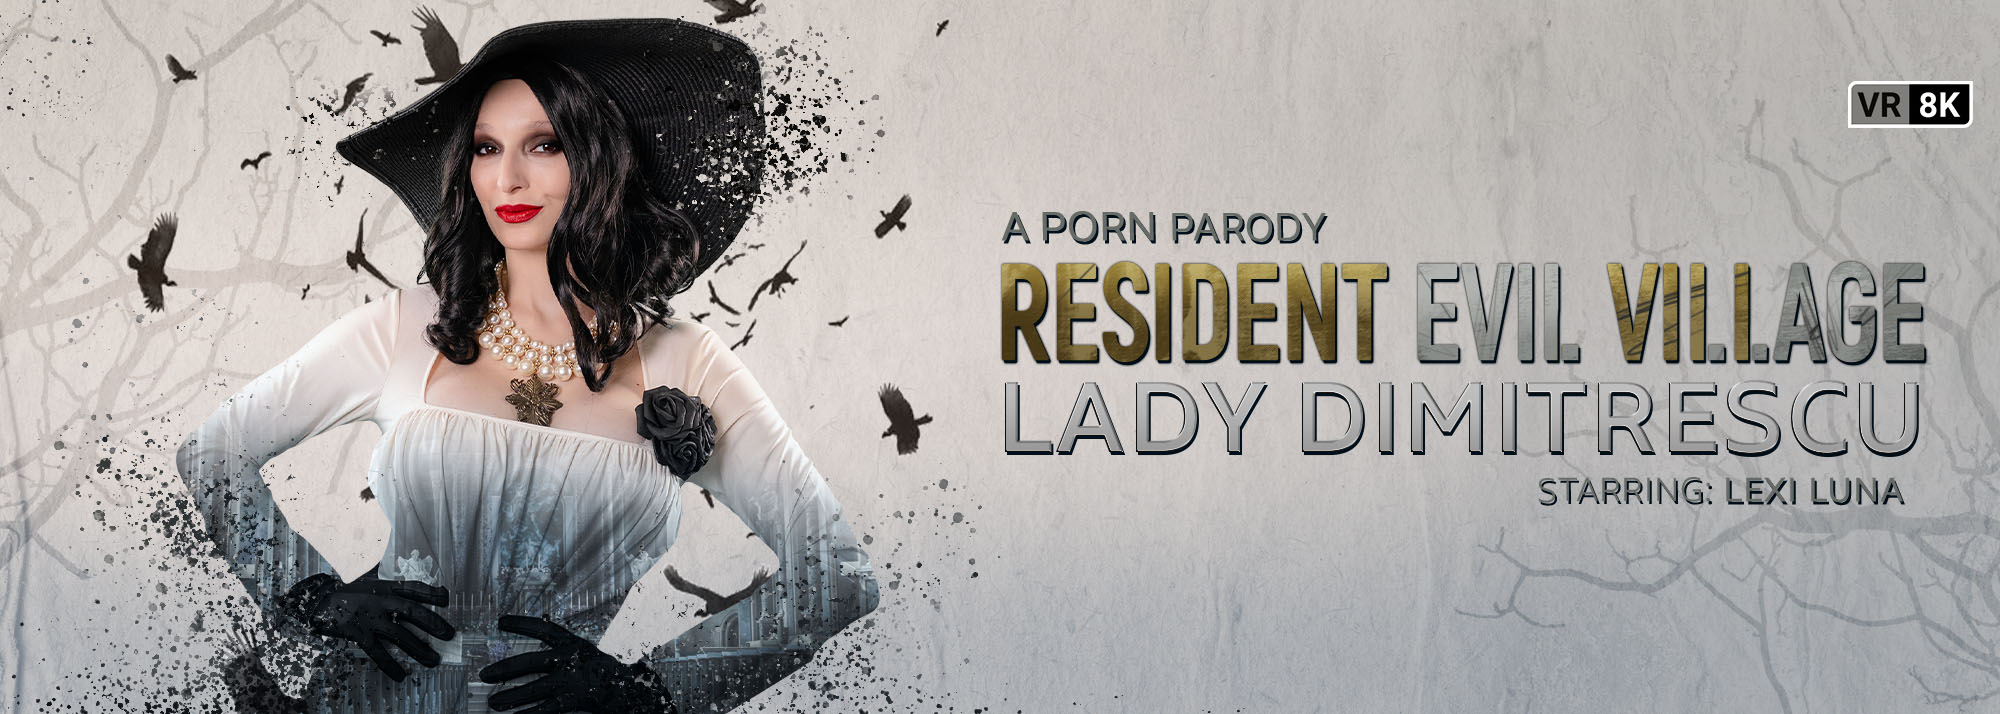 Resident Evil Village: Lady Dimitrescu (A Porn Parody) - VR Video, Starring: Lexi Luna